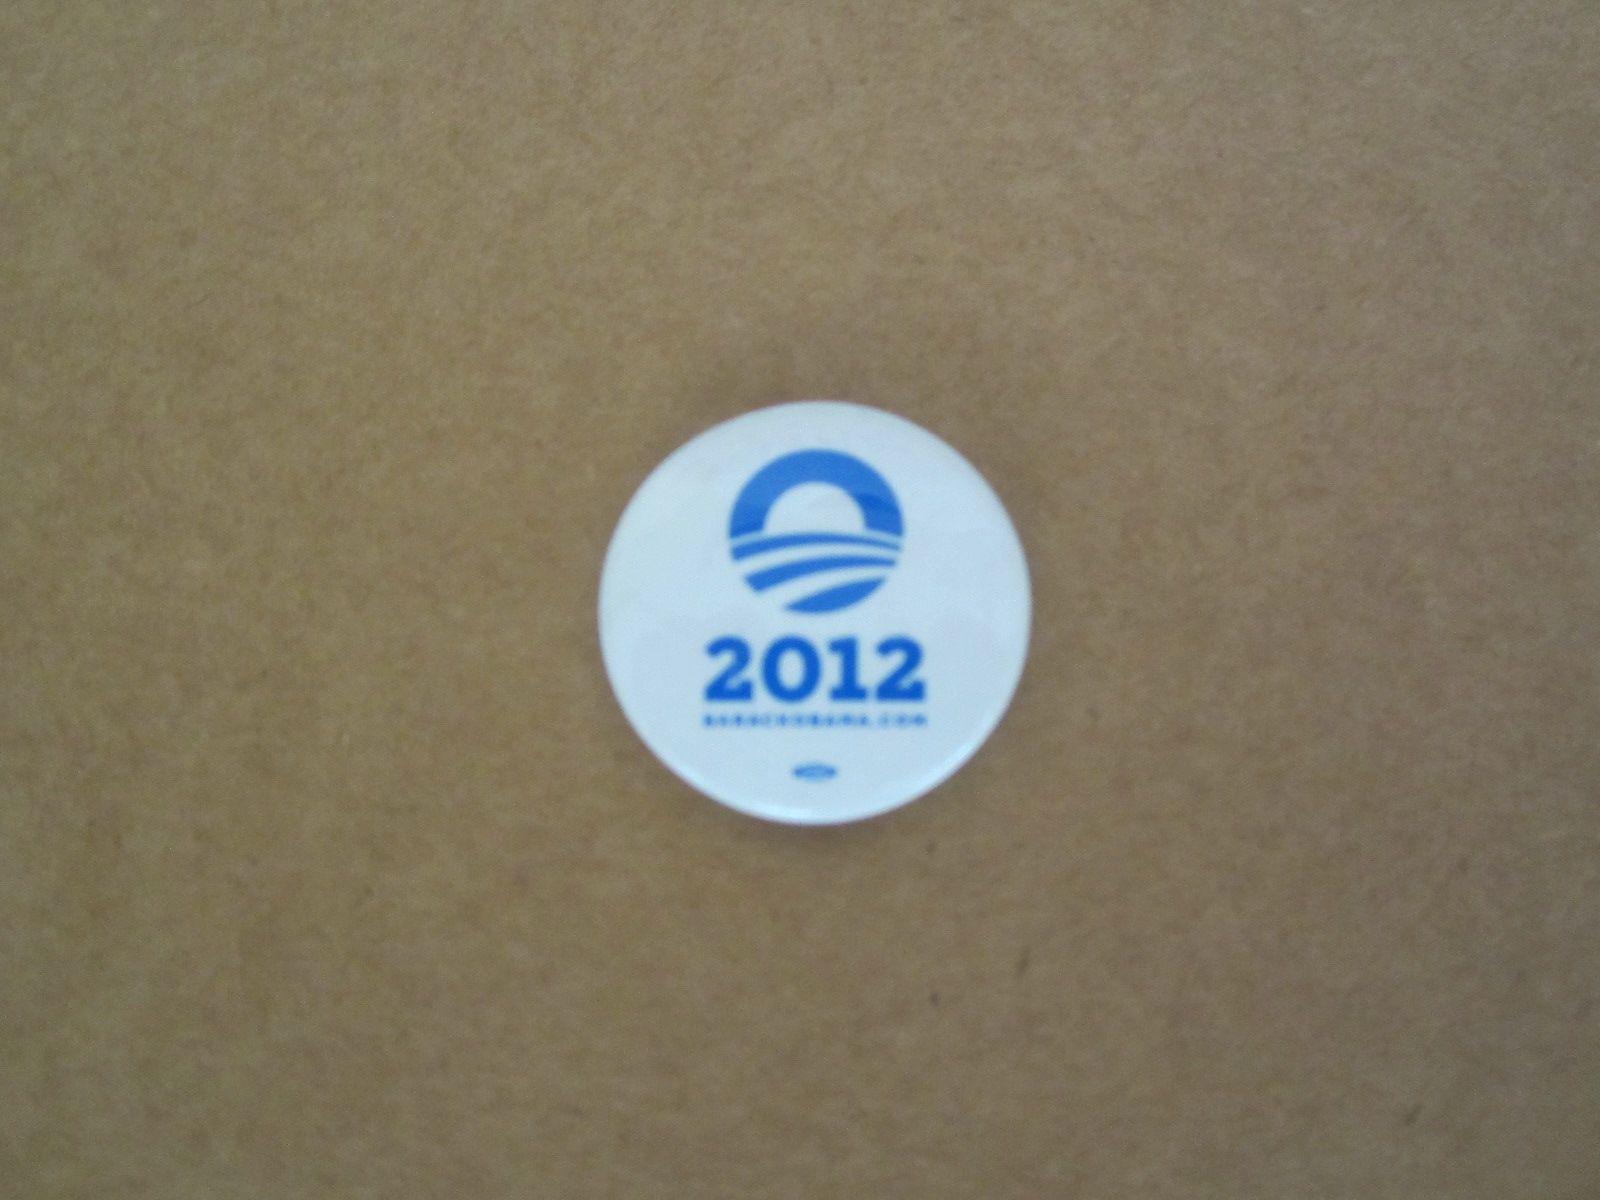 Small Obama Logo - Barack Obama 2012 small white logo button or pin